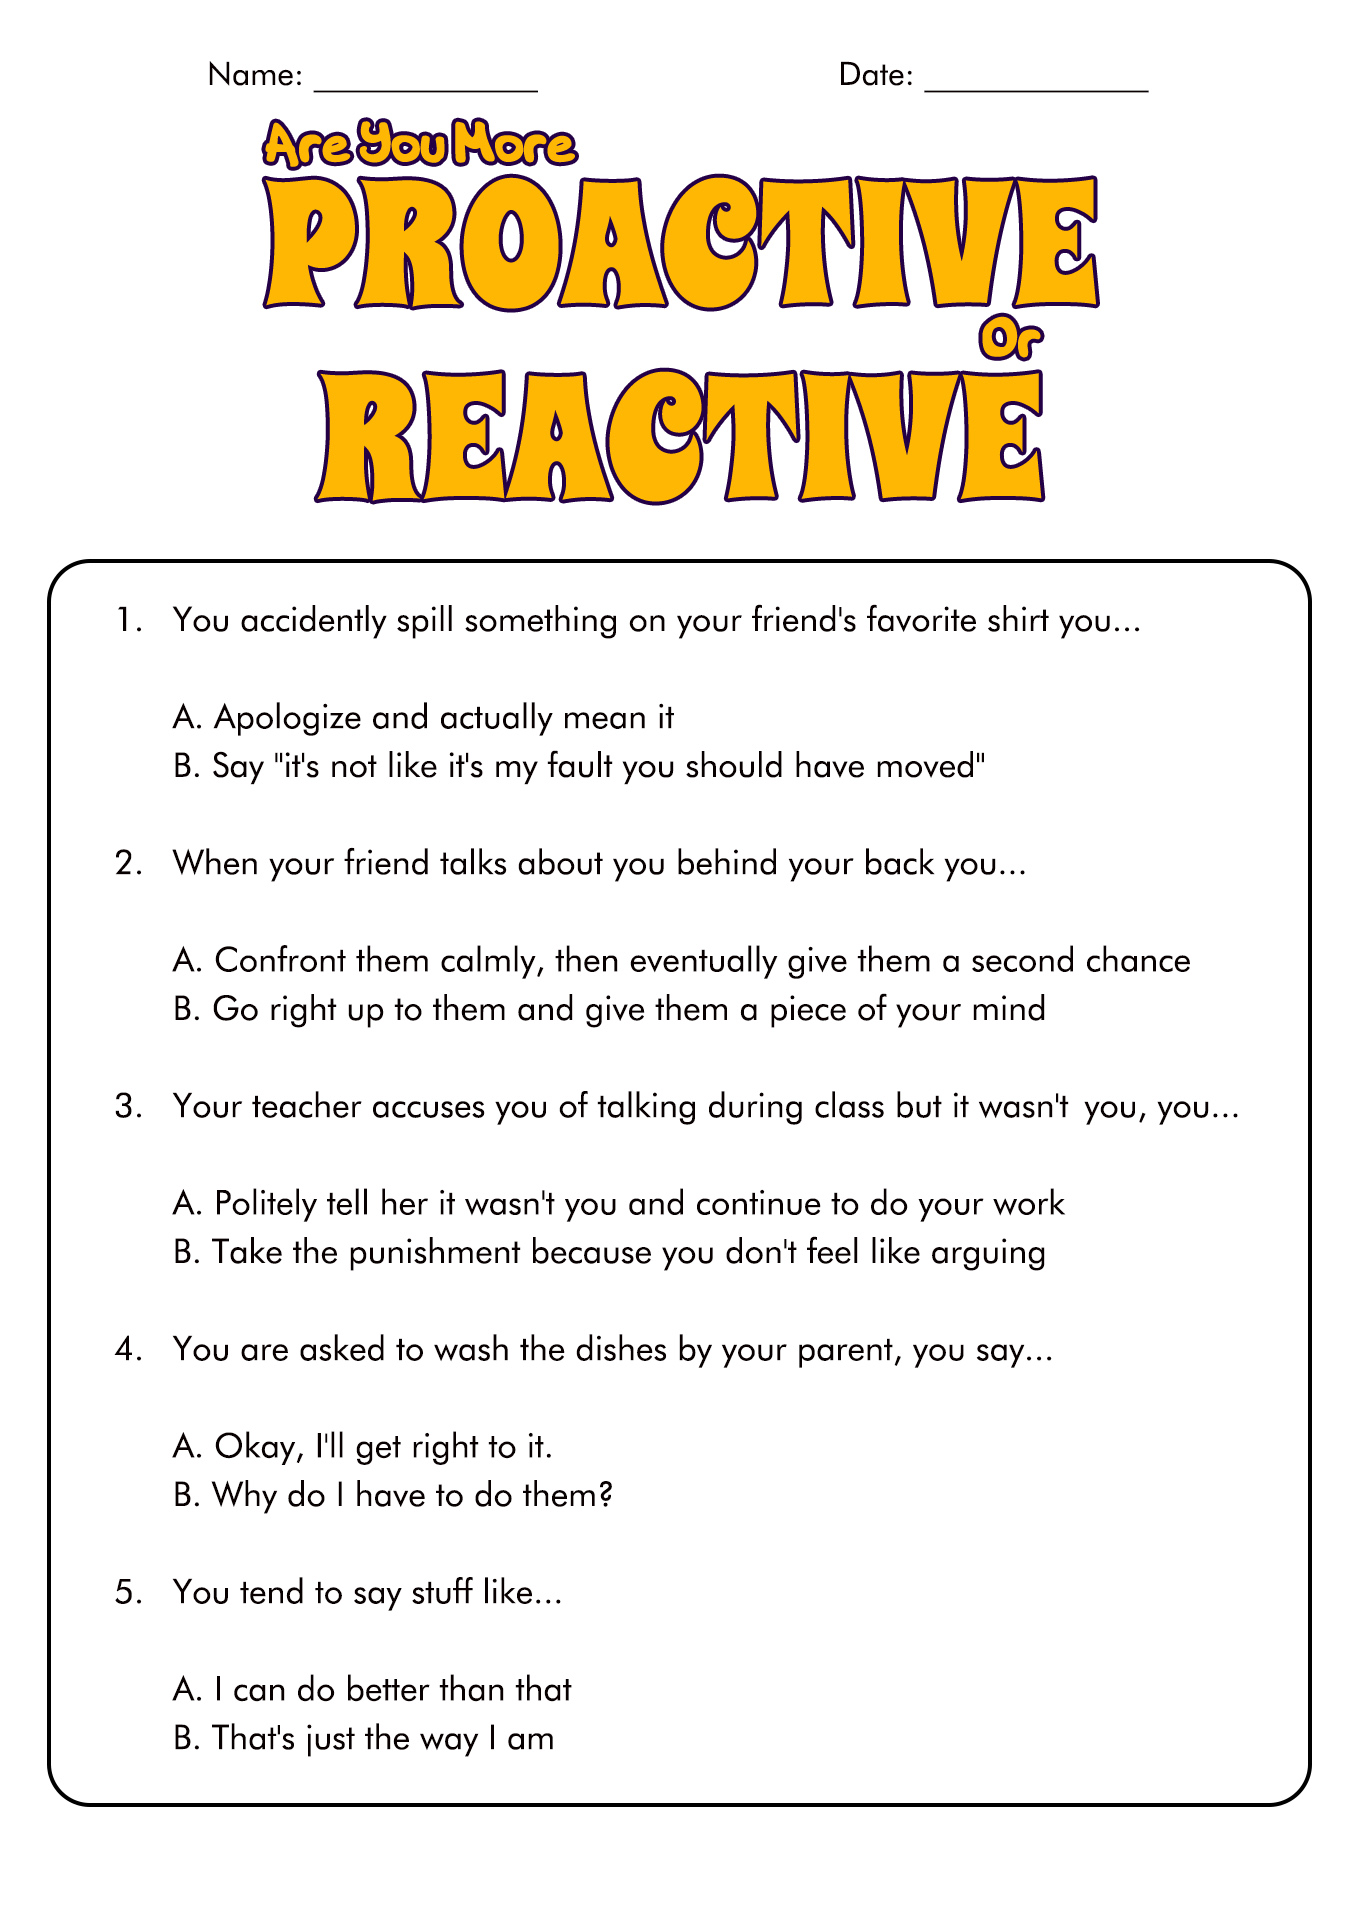 Be Proactive 7 Habits Worksheets Image